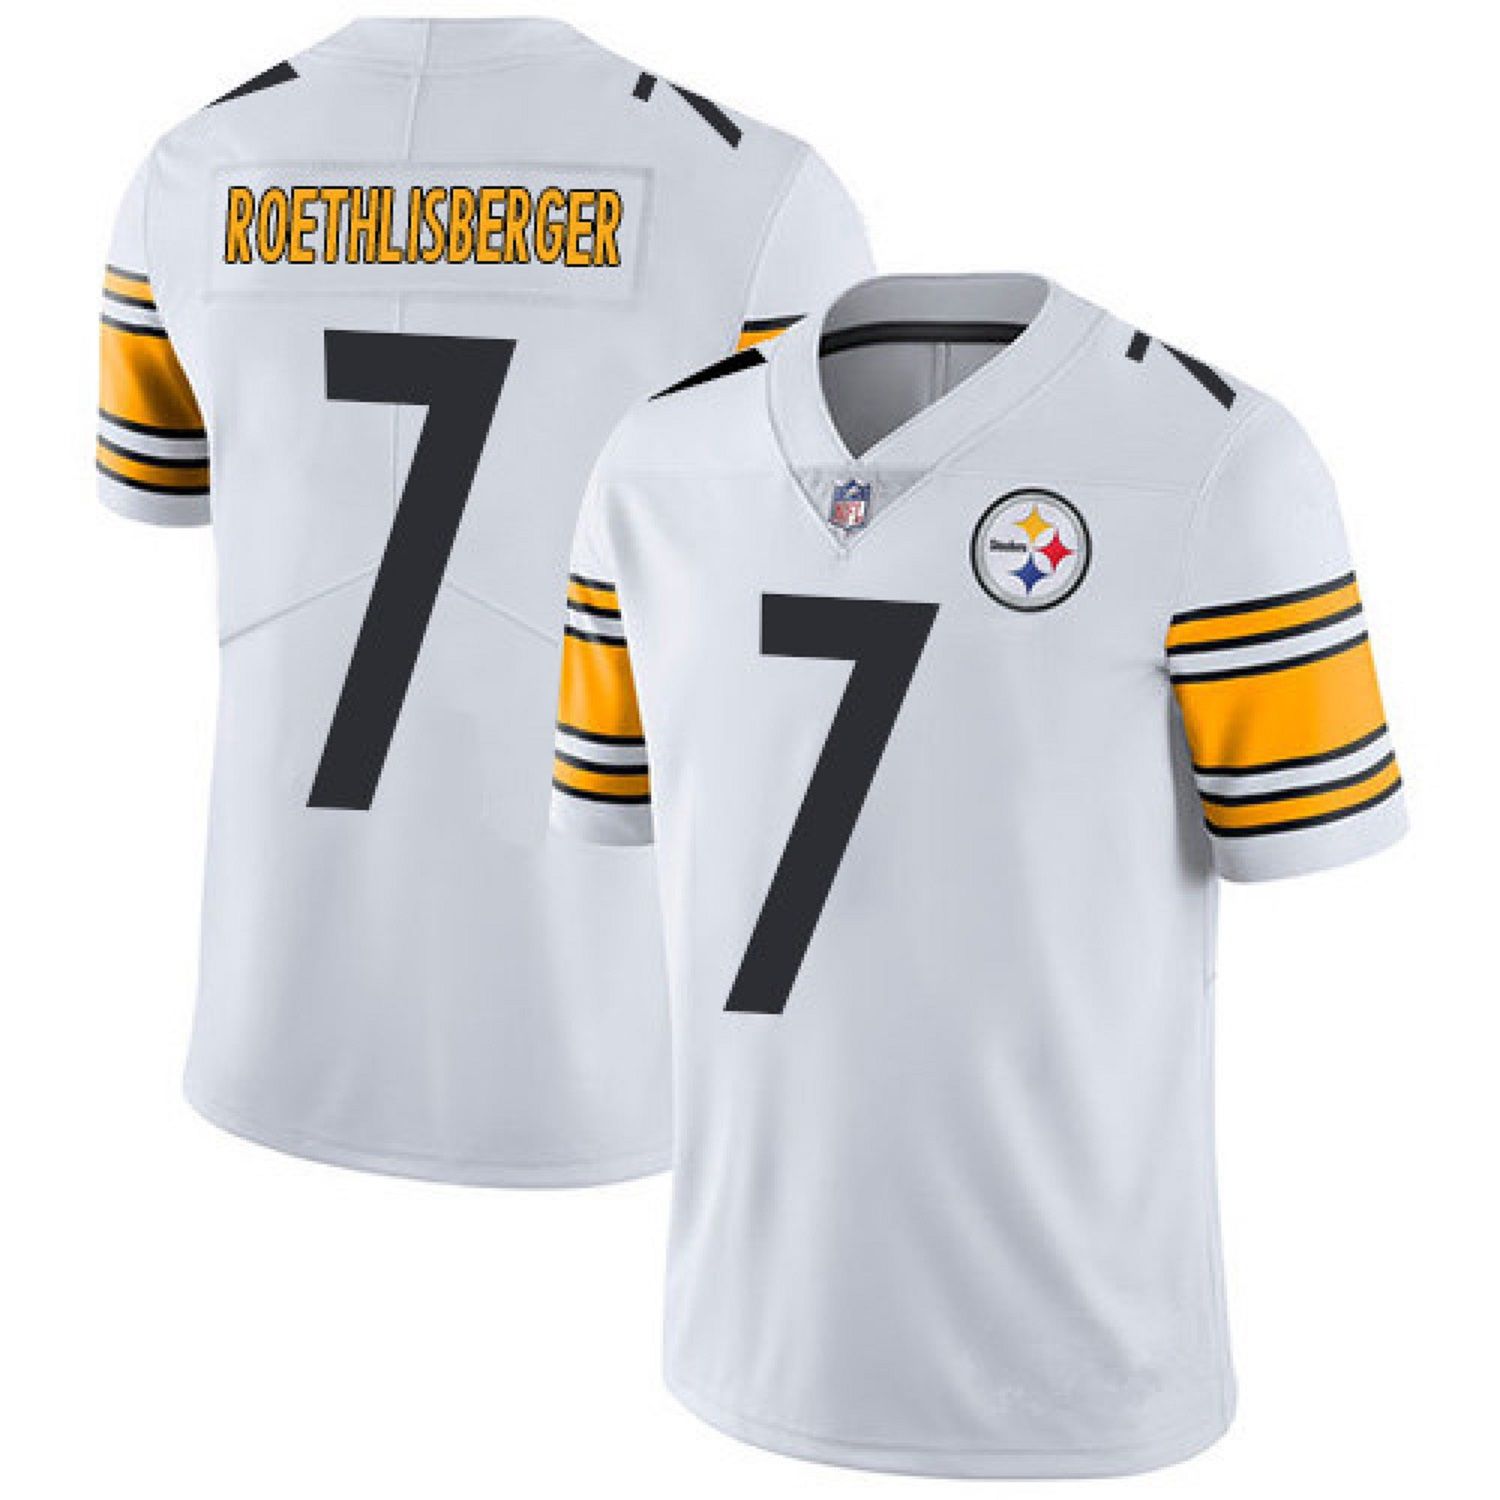 Camisa Pittsburgh Steelers 7 Roethlisberger home bordada 806 - Boutique  ZeroUm | Conceito Hype de A-Z